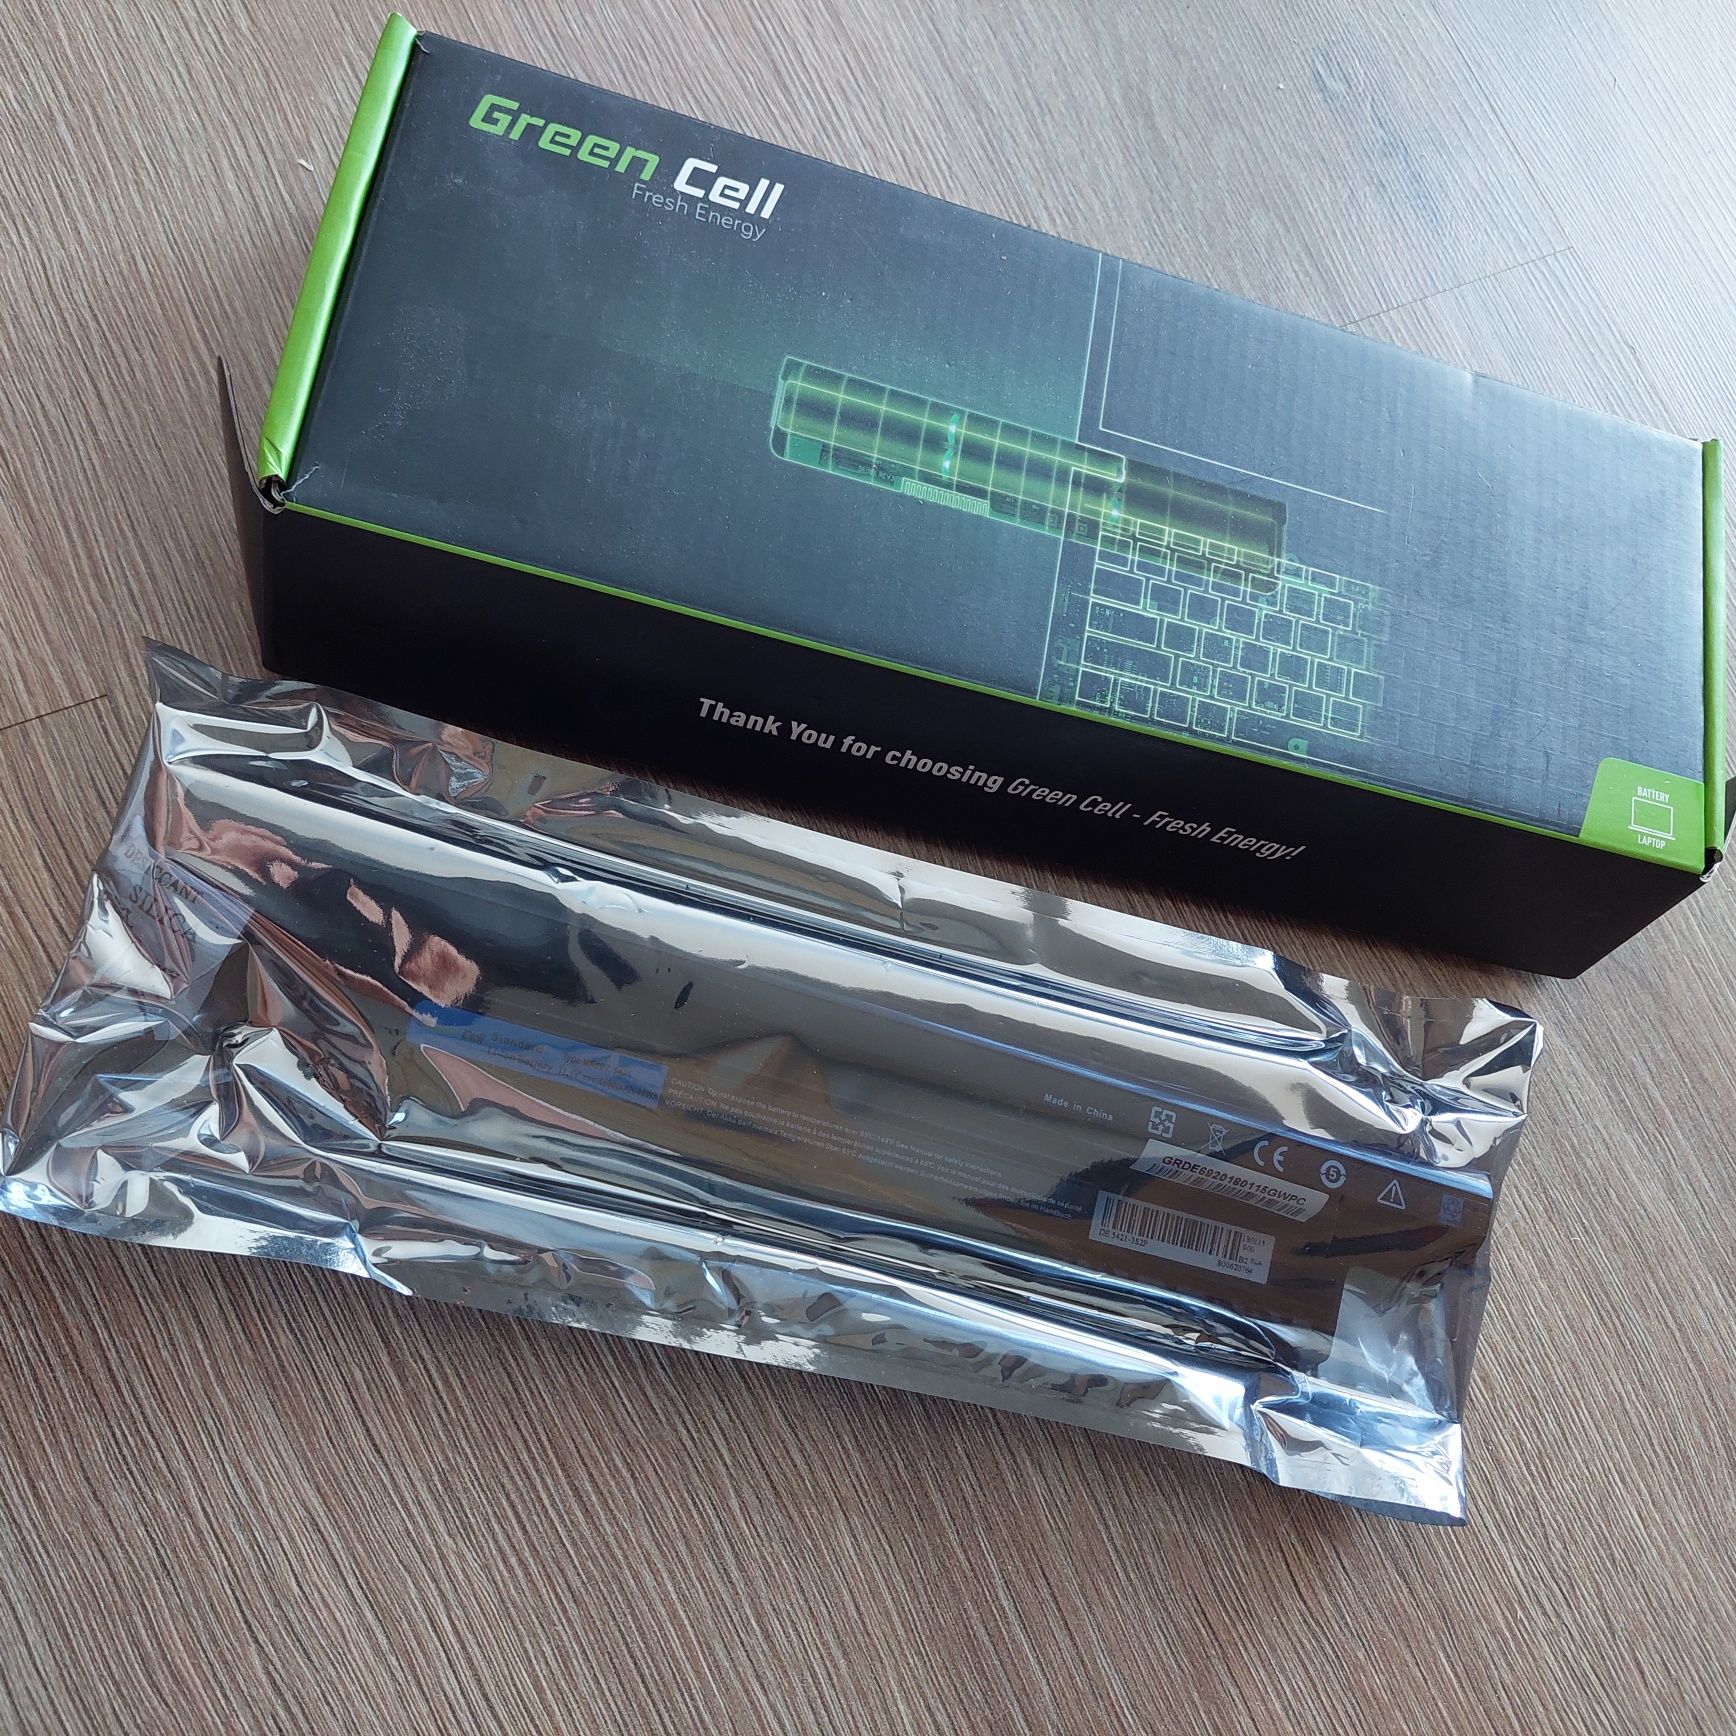 Nowa bateria do laptopa dell - green cell de69